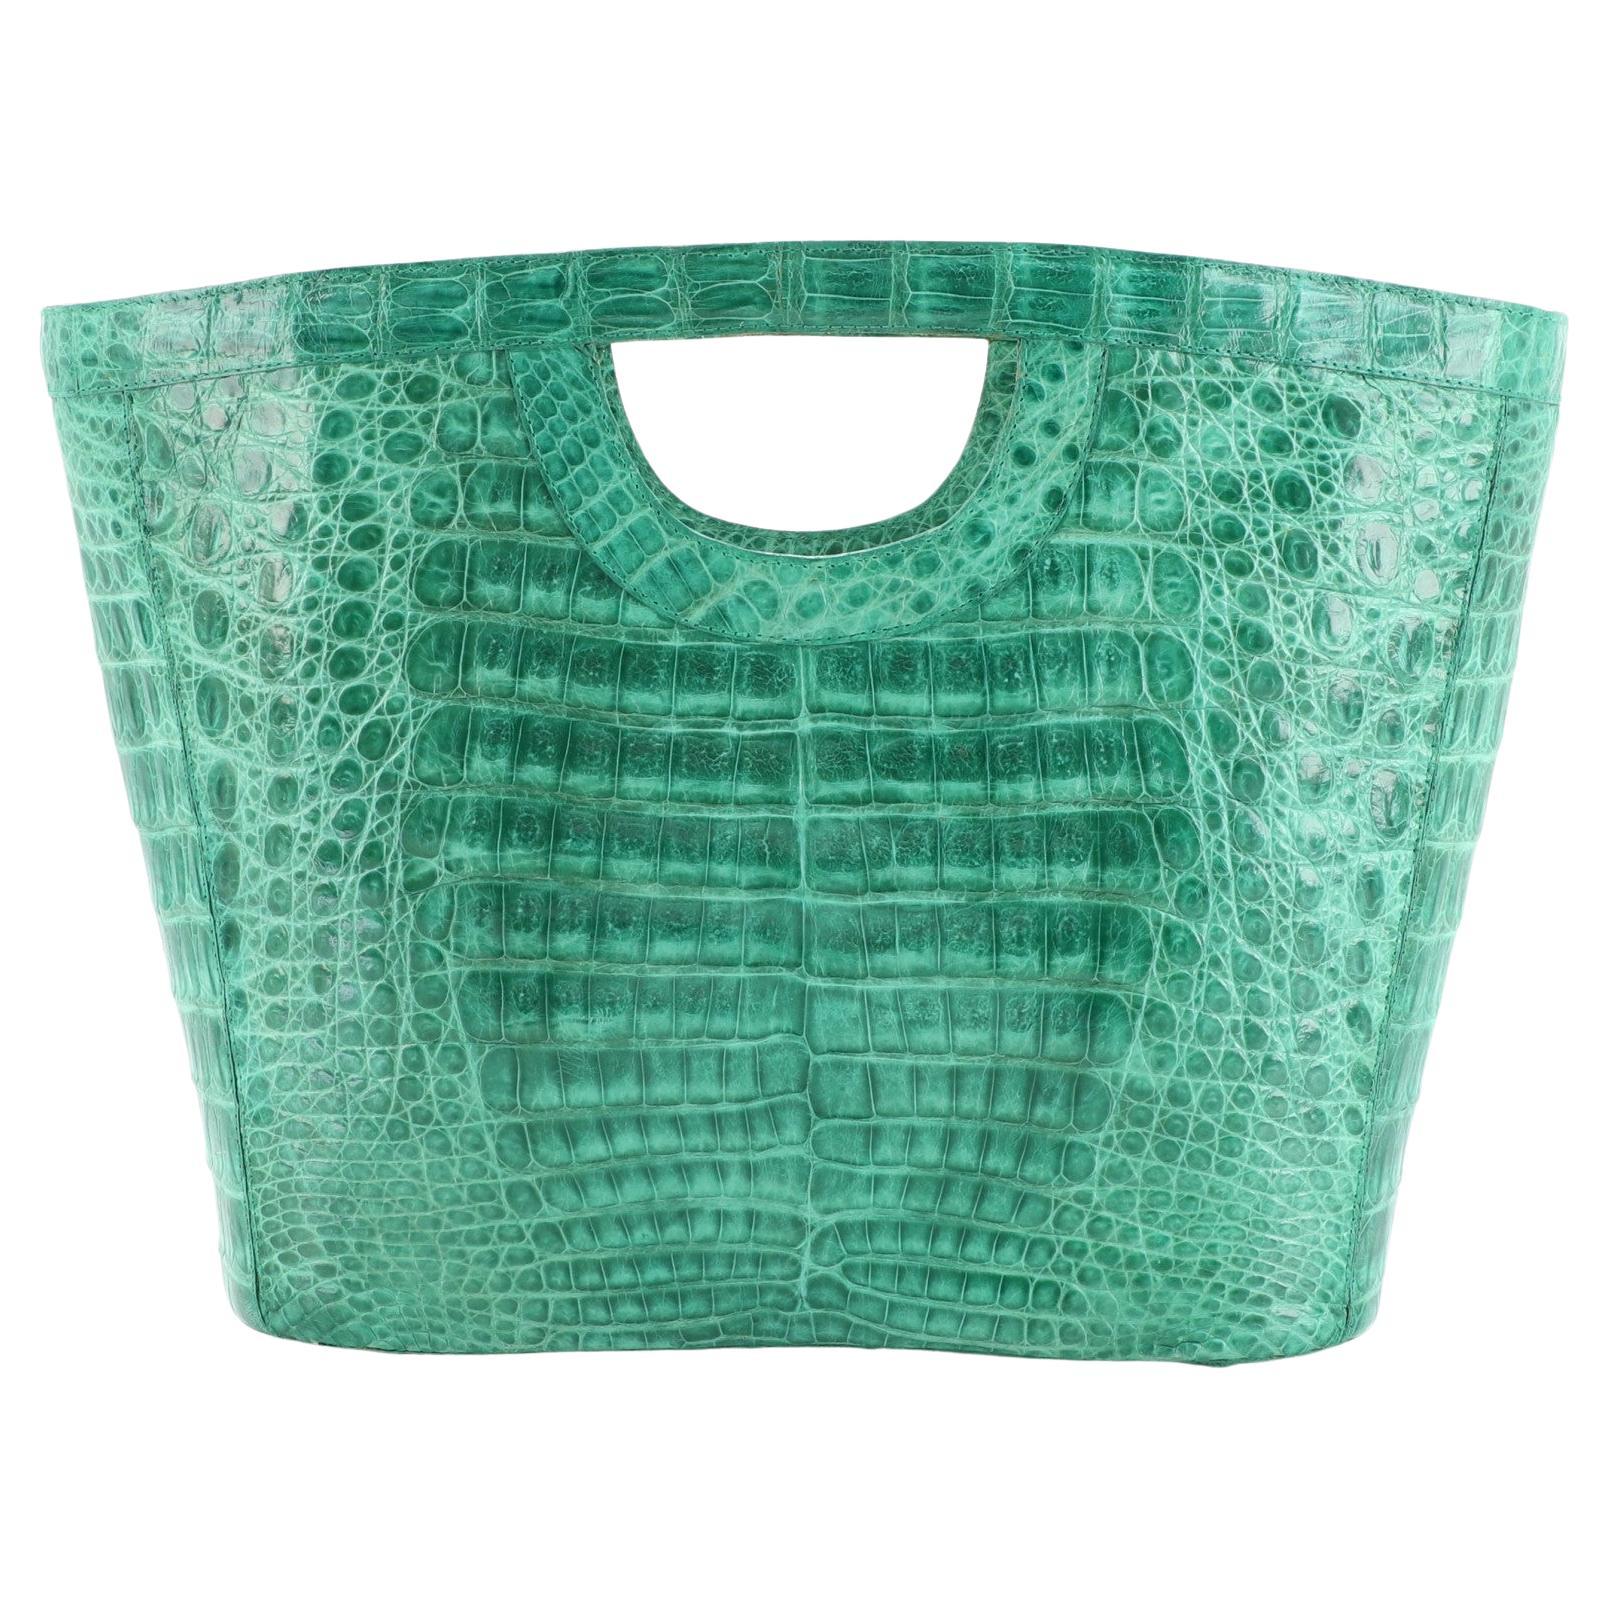 Nancy Gonzalez Green Crocodile Tote Bag For Sale at 1stDibs  nancy  gonzalez bags, nancy gonzalez crocodile handbags, nancy gonzalez crocodile tote  bag